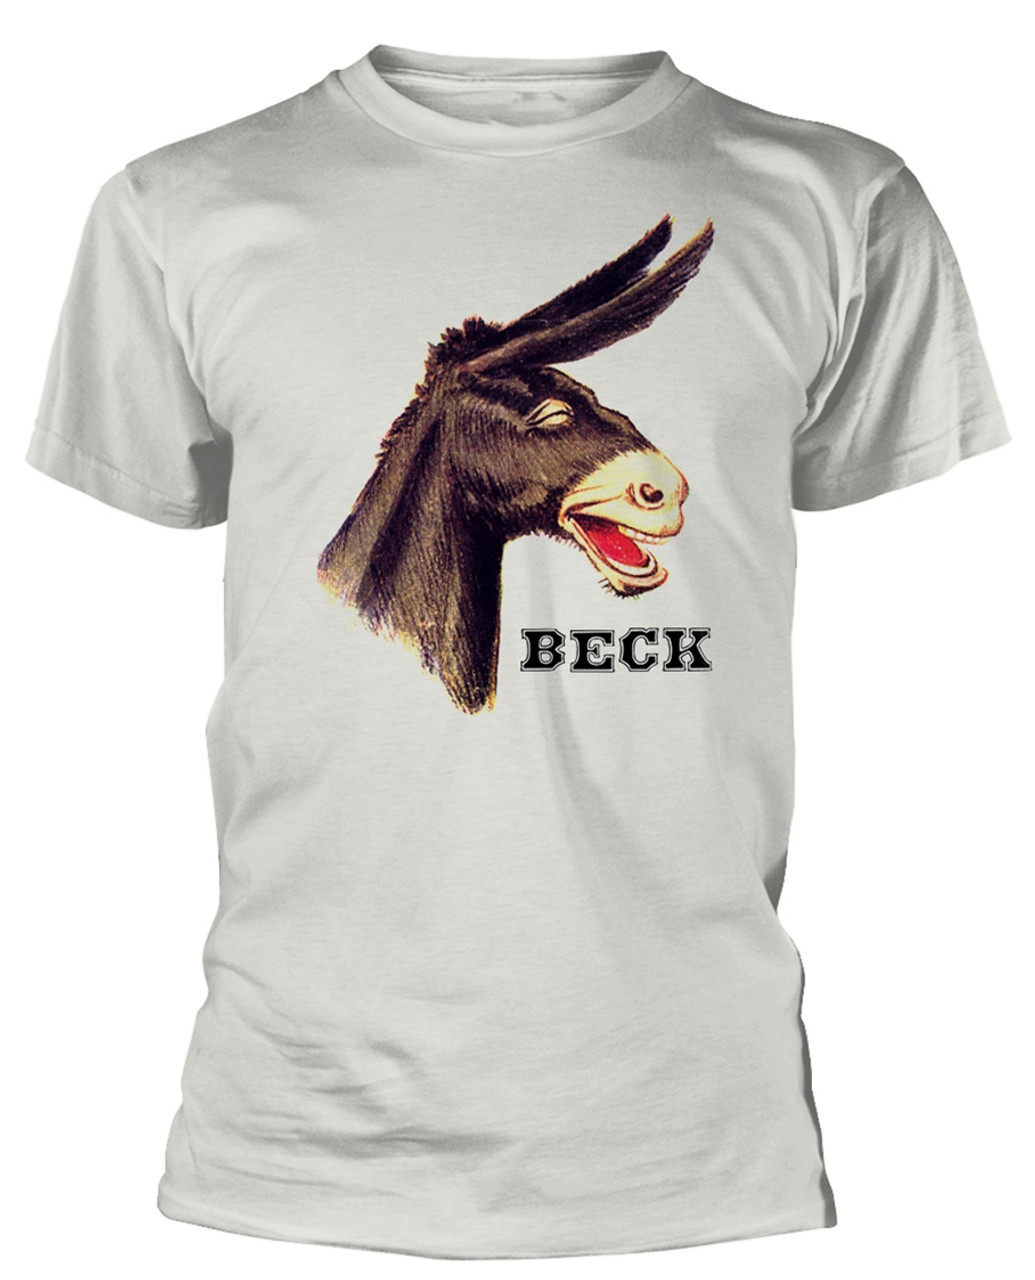 Beck 'Donkey' T-Shirt